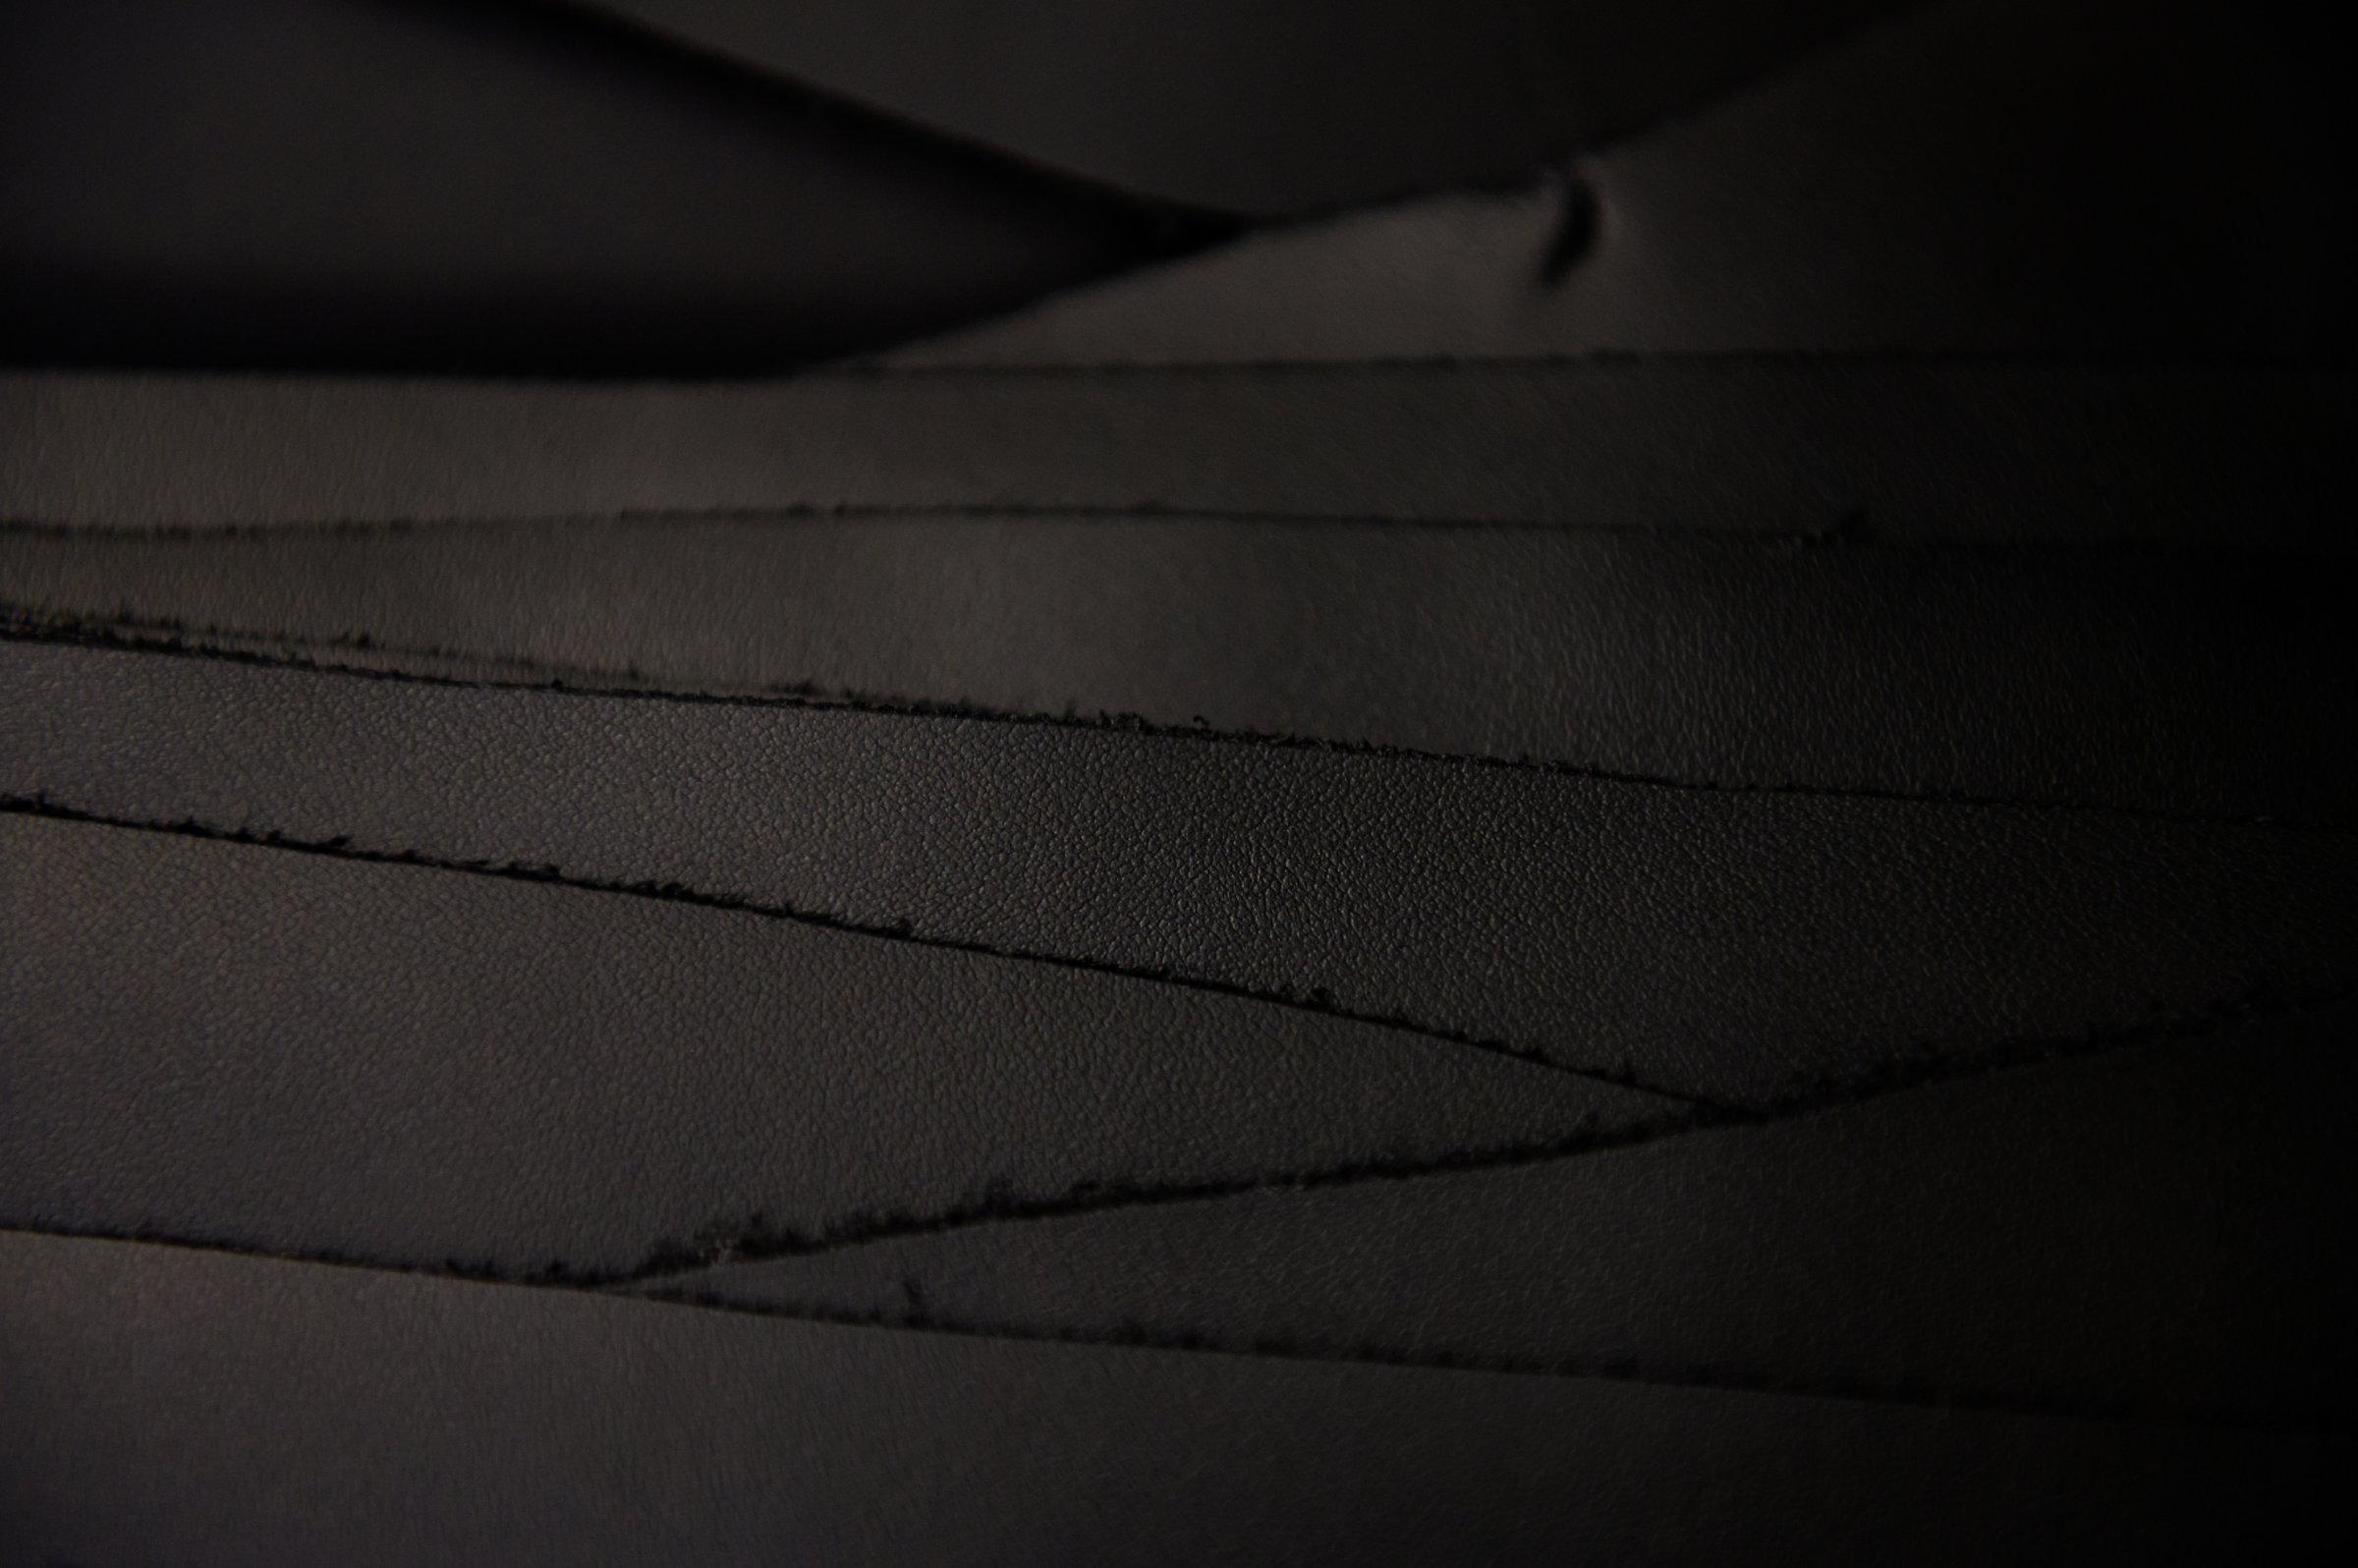 Black leather detail